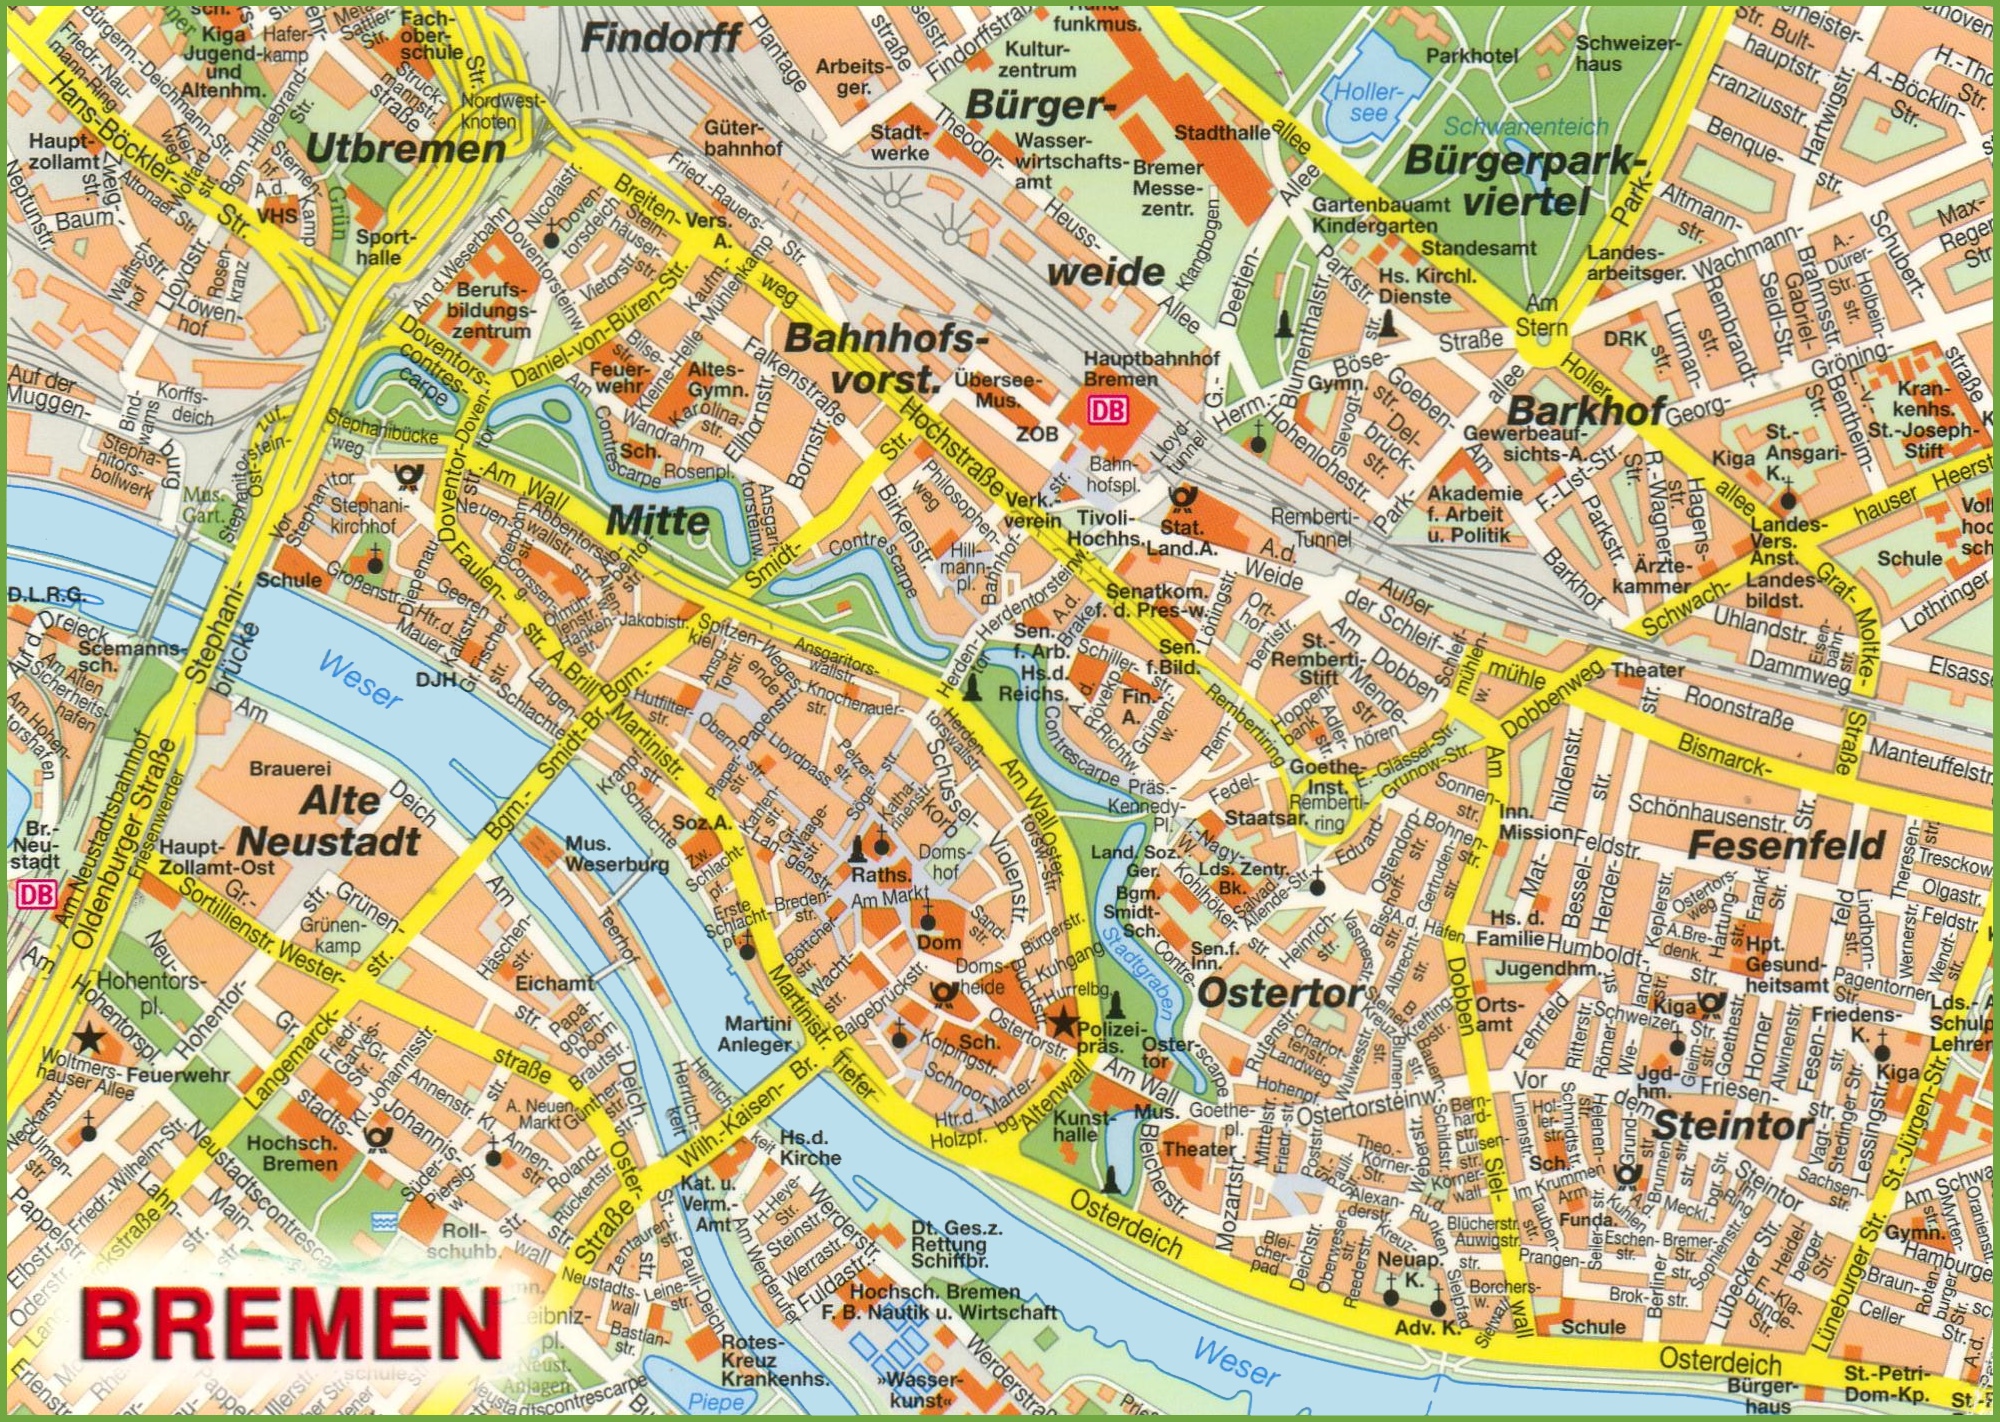 bremen-sightseeing-map.jpg